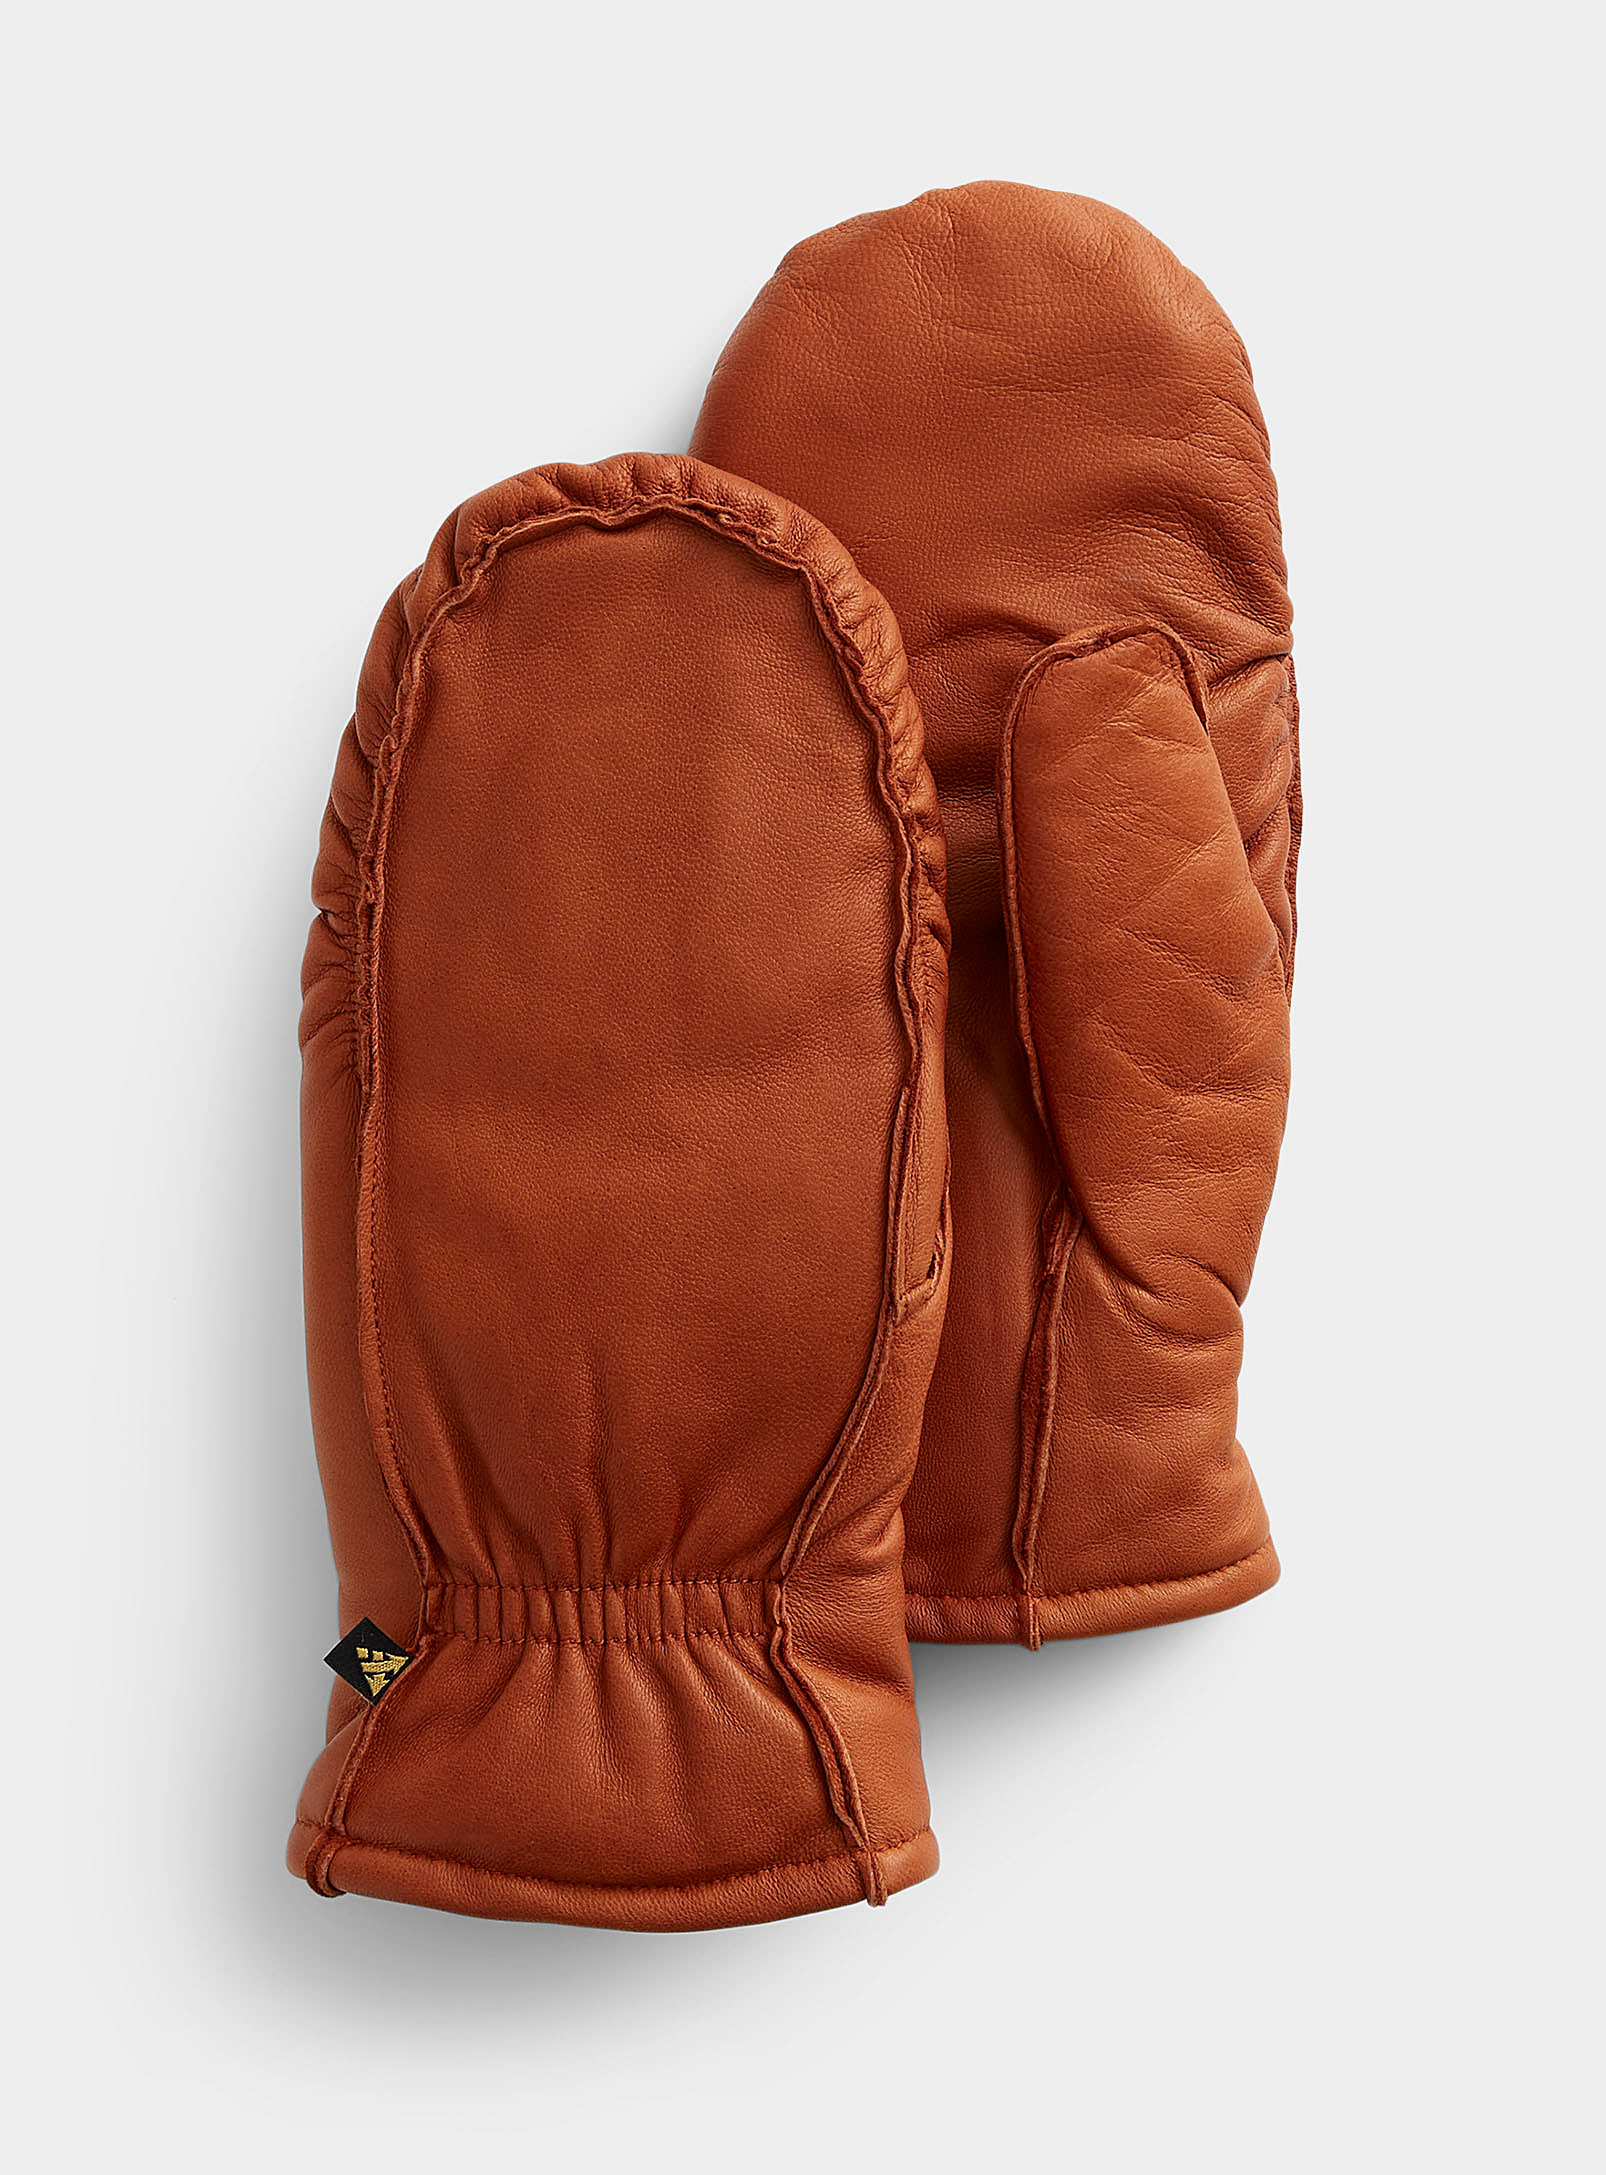 Auclair Built-in Glove Leather Mittens In Medium Brown